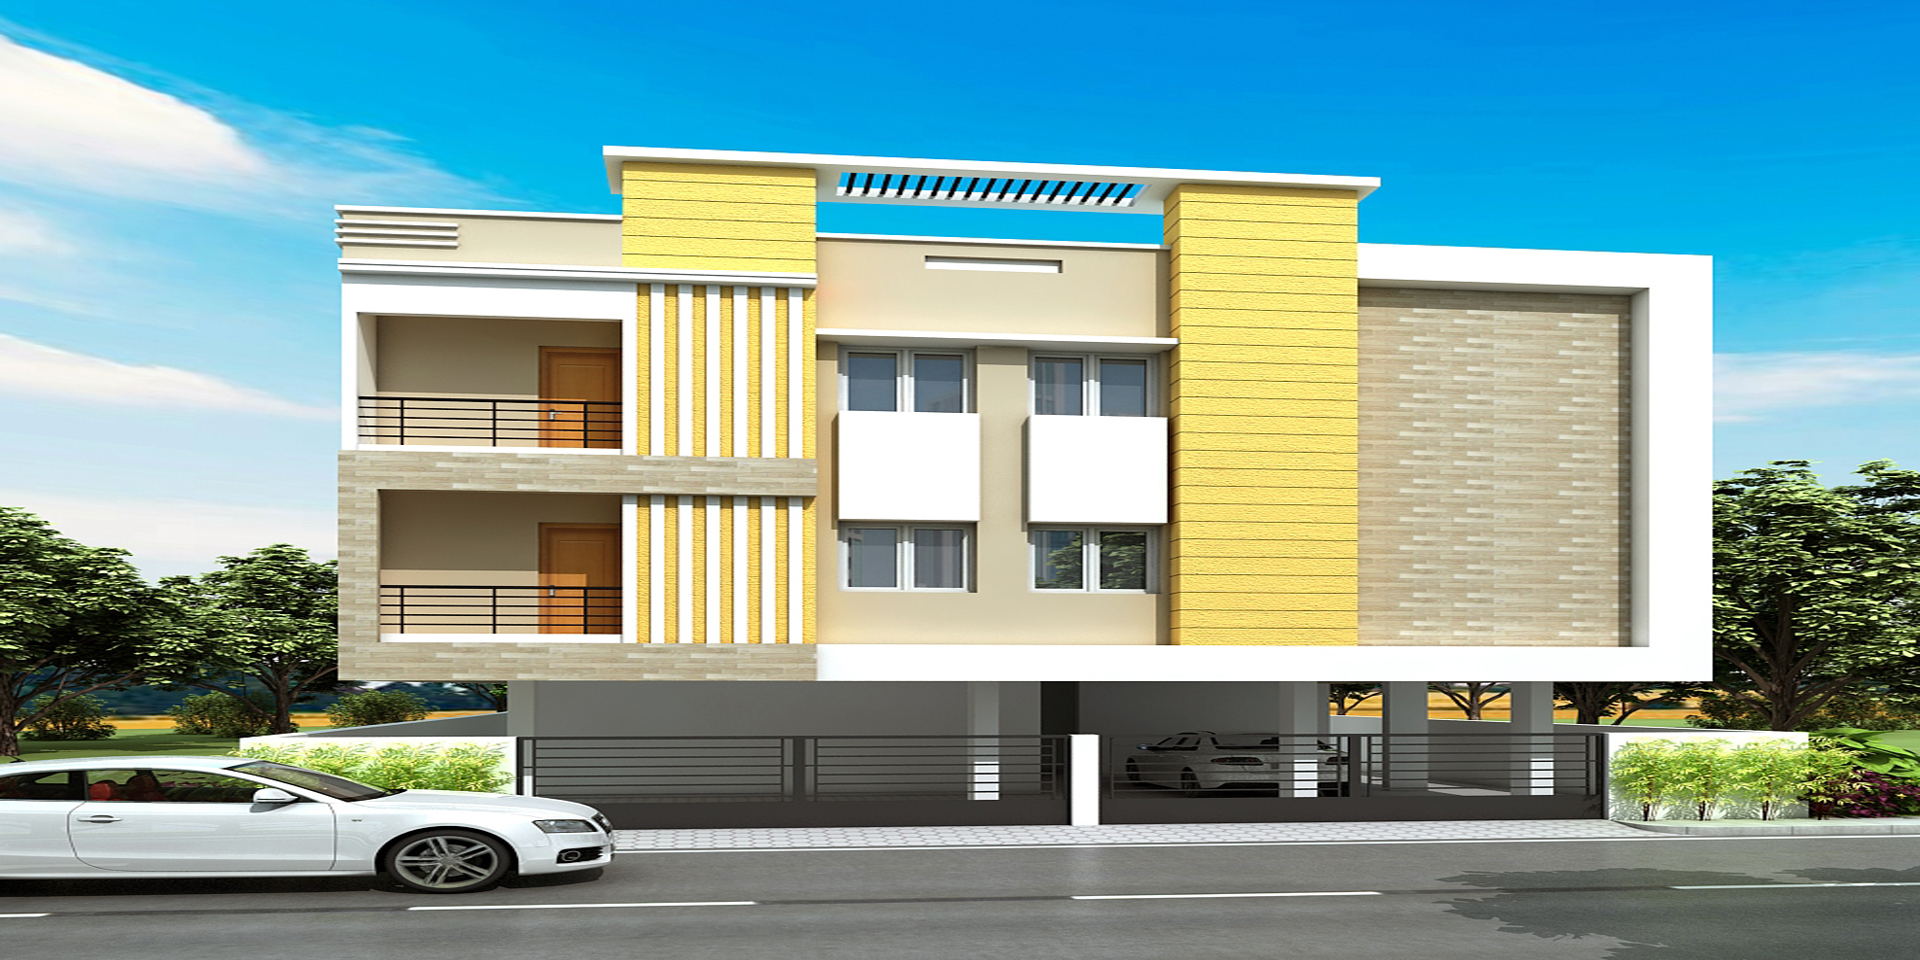 1, 2 BHK Apartment for sale in Thiruneermalai